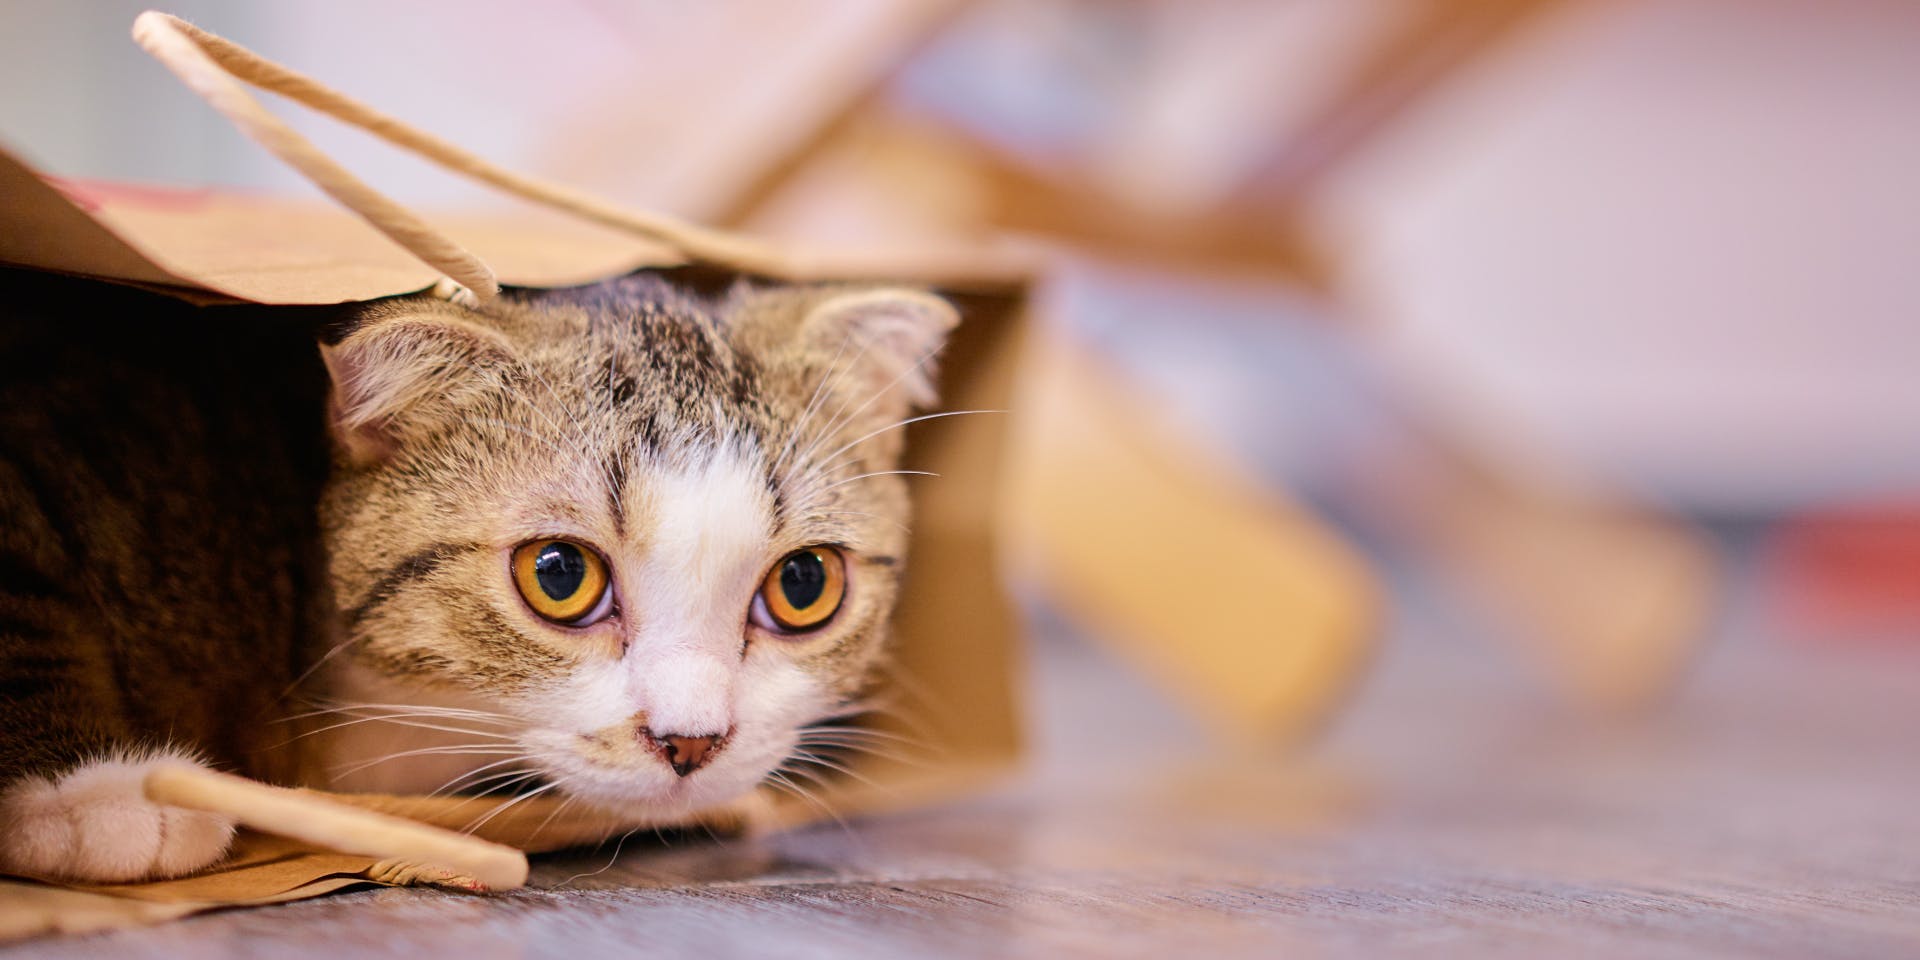 A brown kitten hiding in a paper bag.